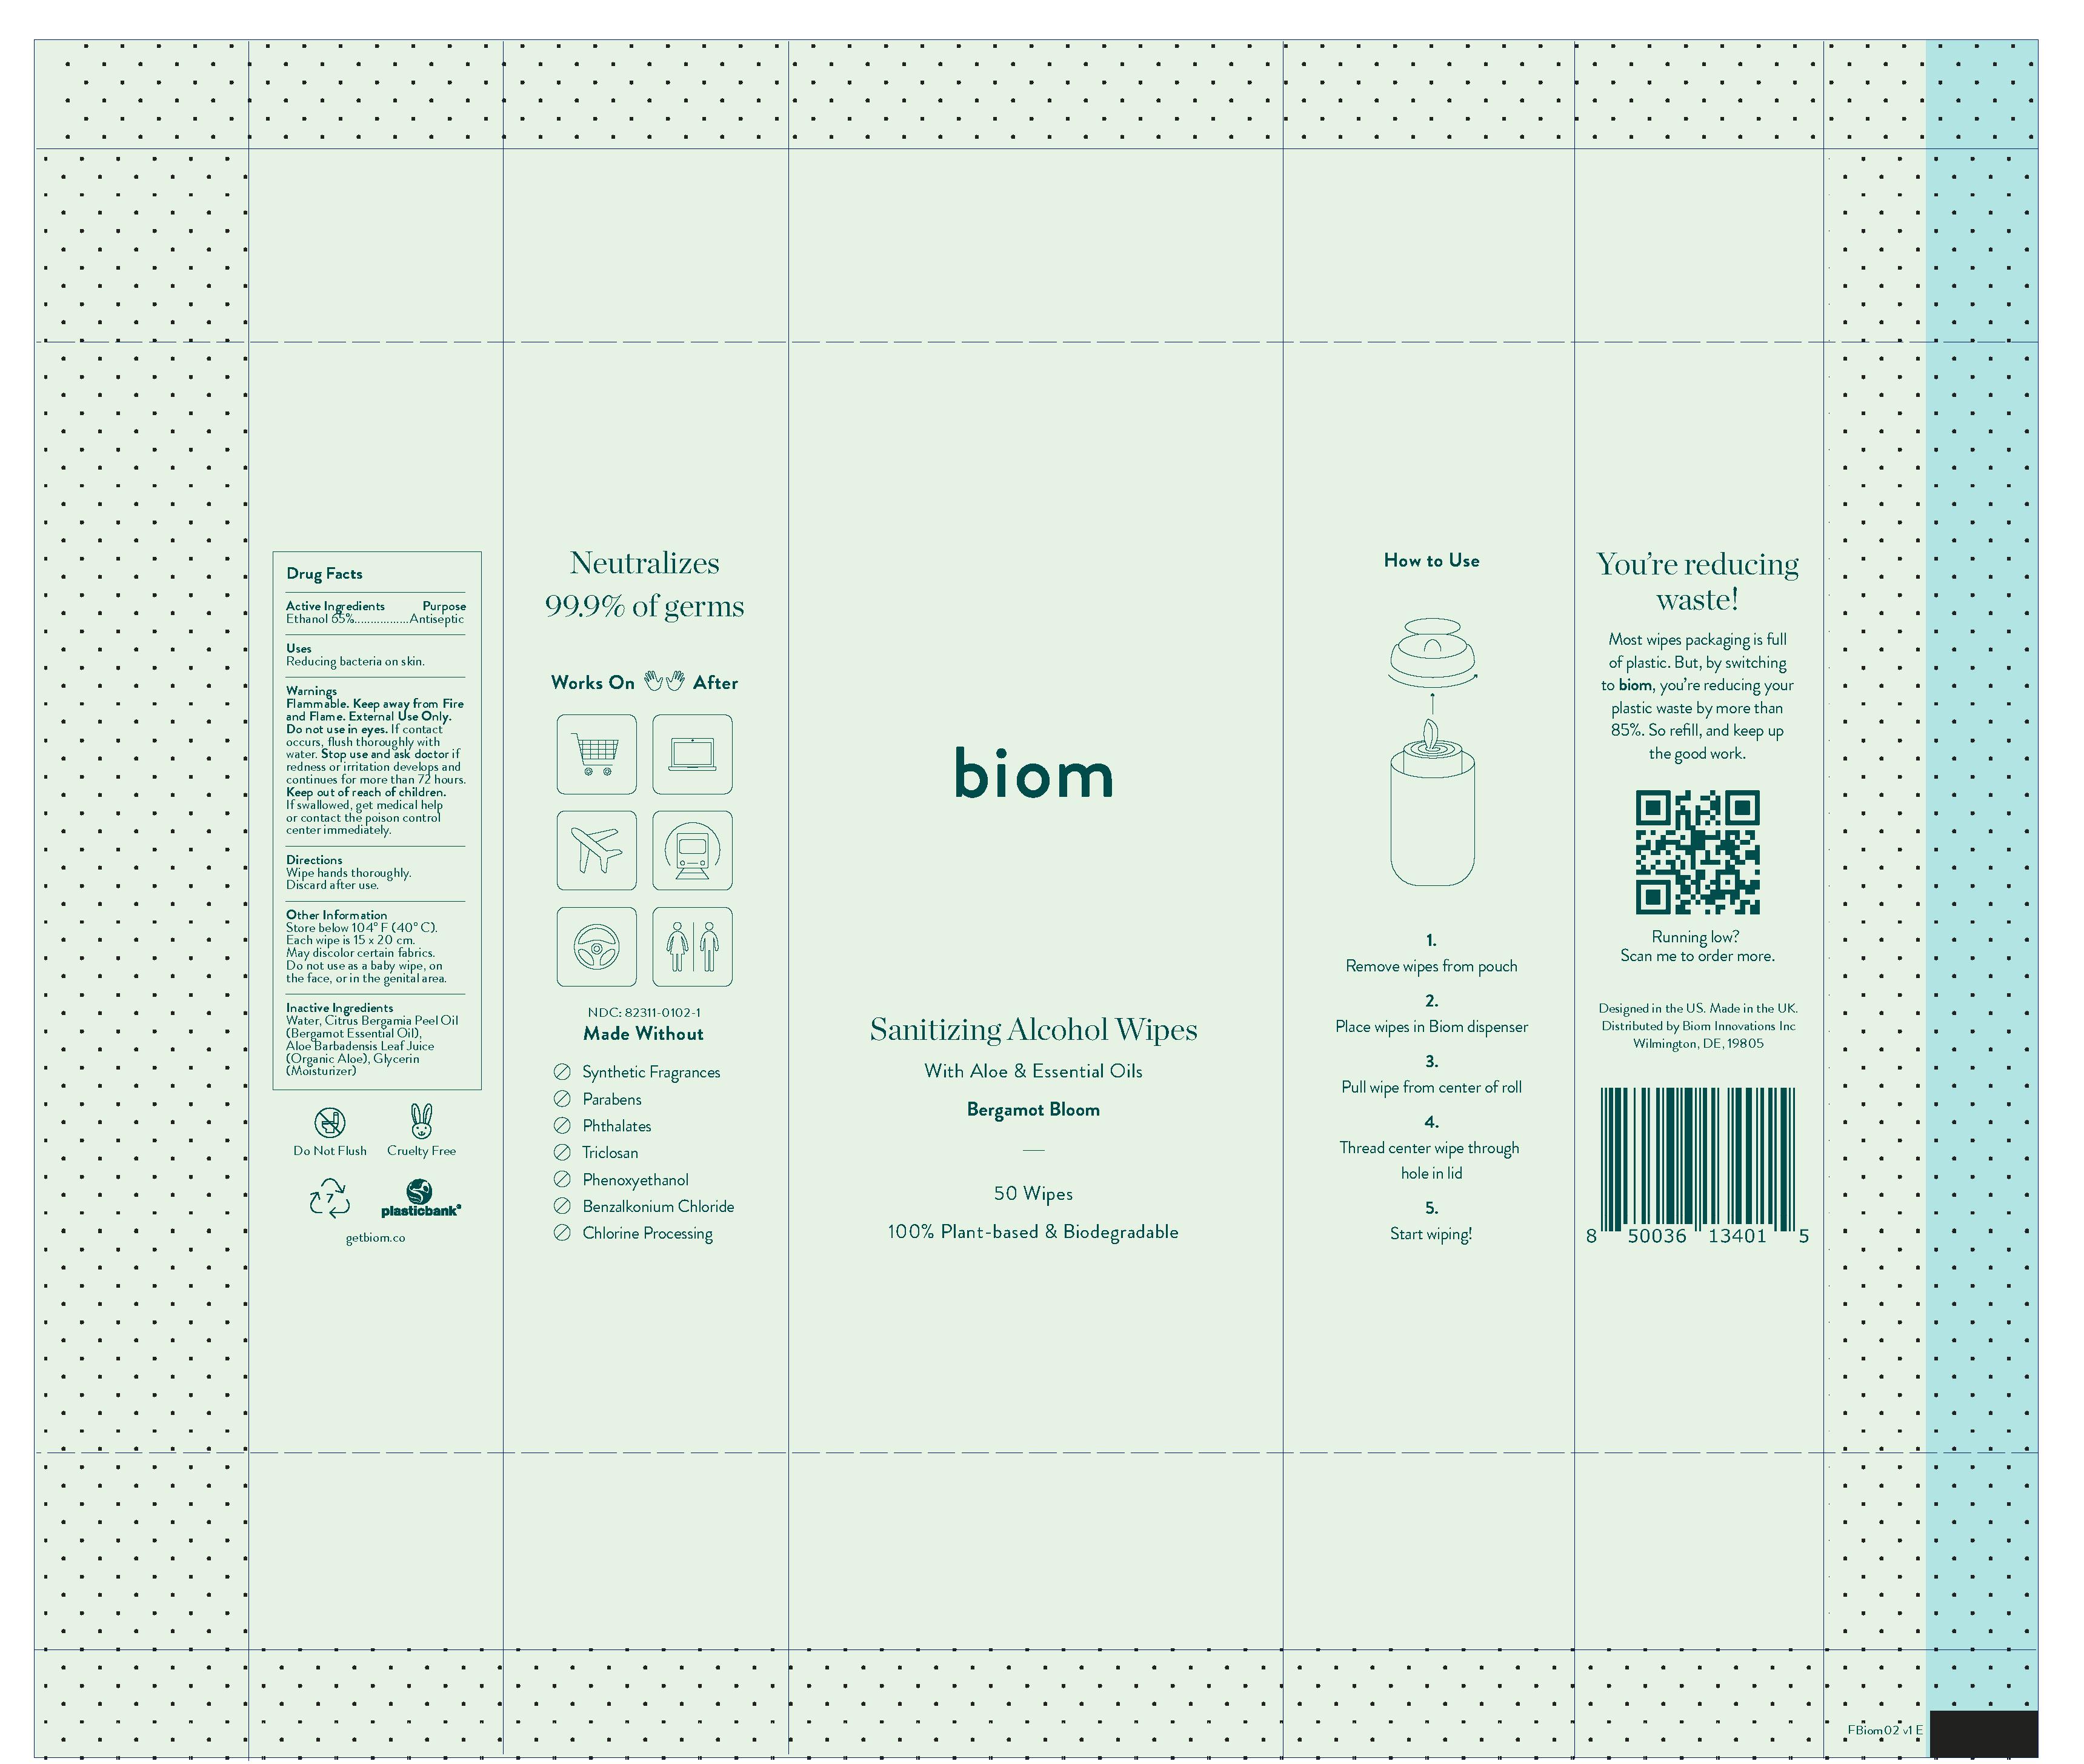 BIOM02 Bergamot Bloom - sanitising alcohol wipes